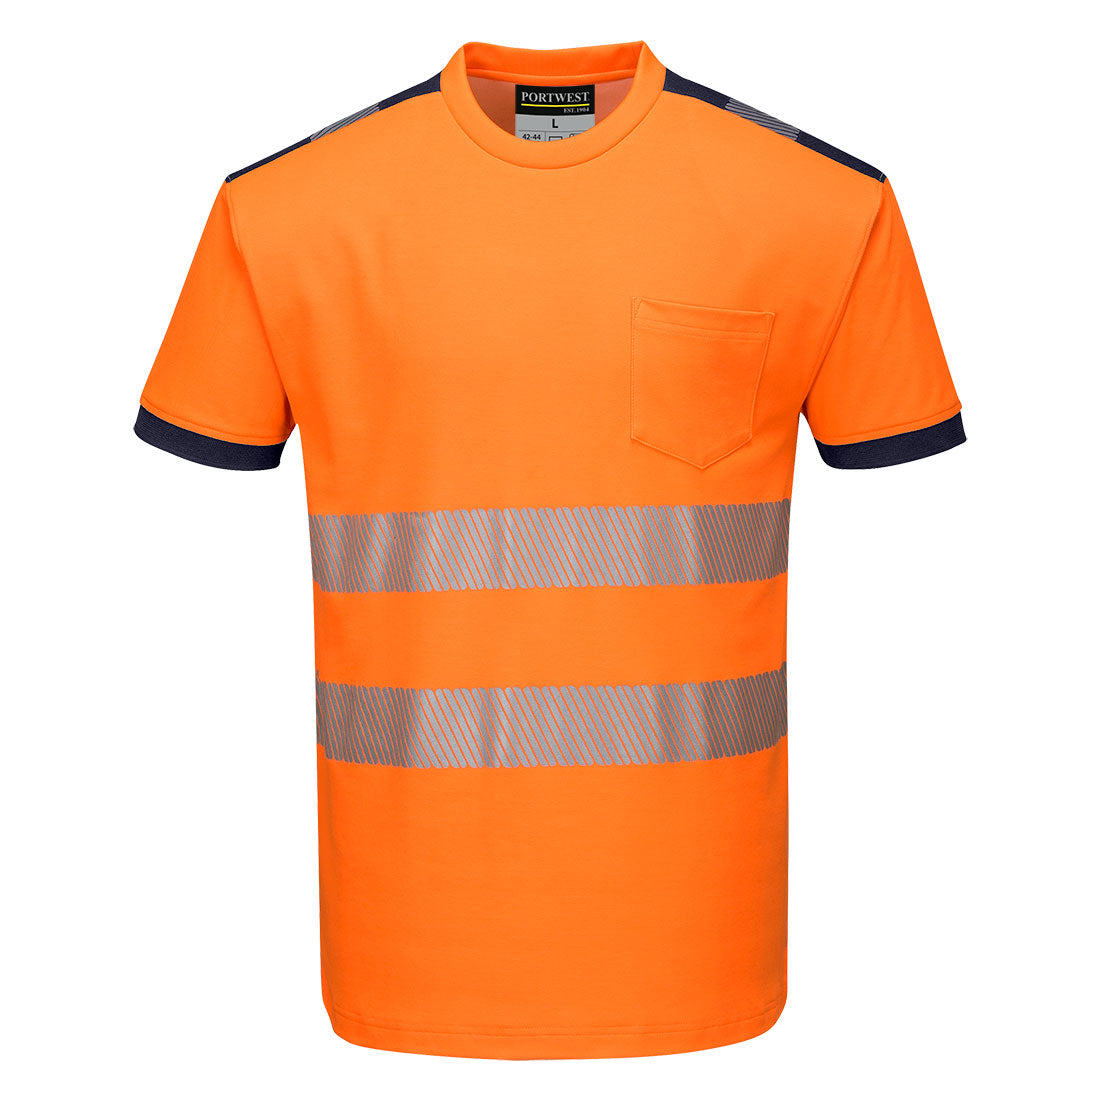 Portwest T181 - Orange/Navy Sz M PW3 Hi-Vis Short Sleeved T-Shirt Viz Visibilty